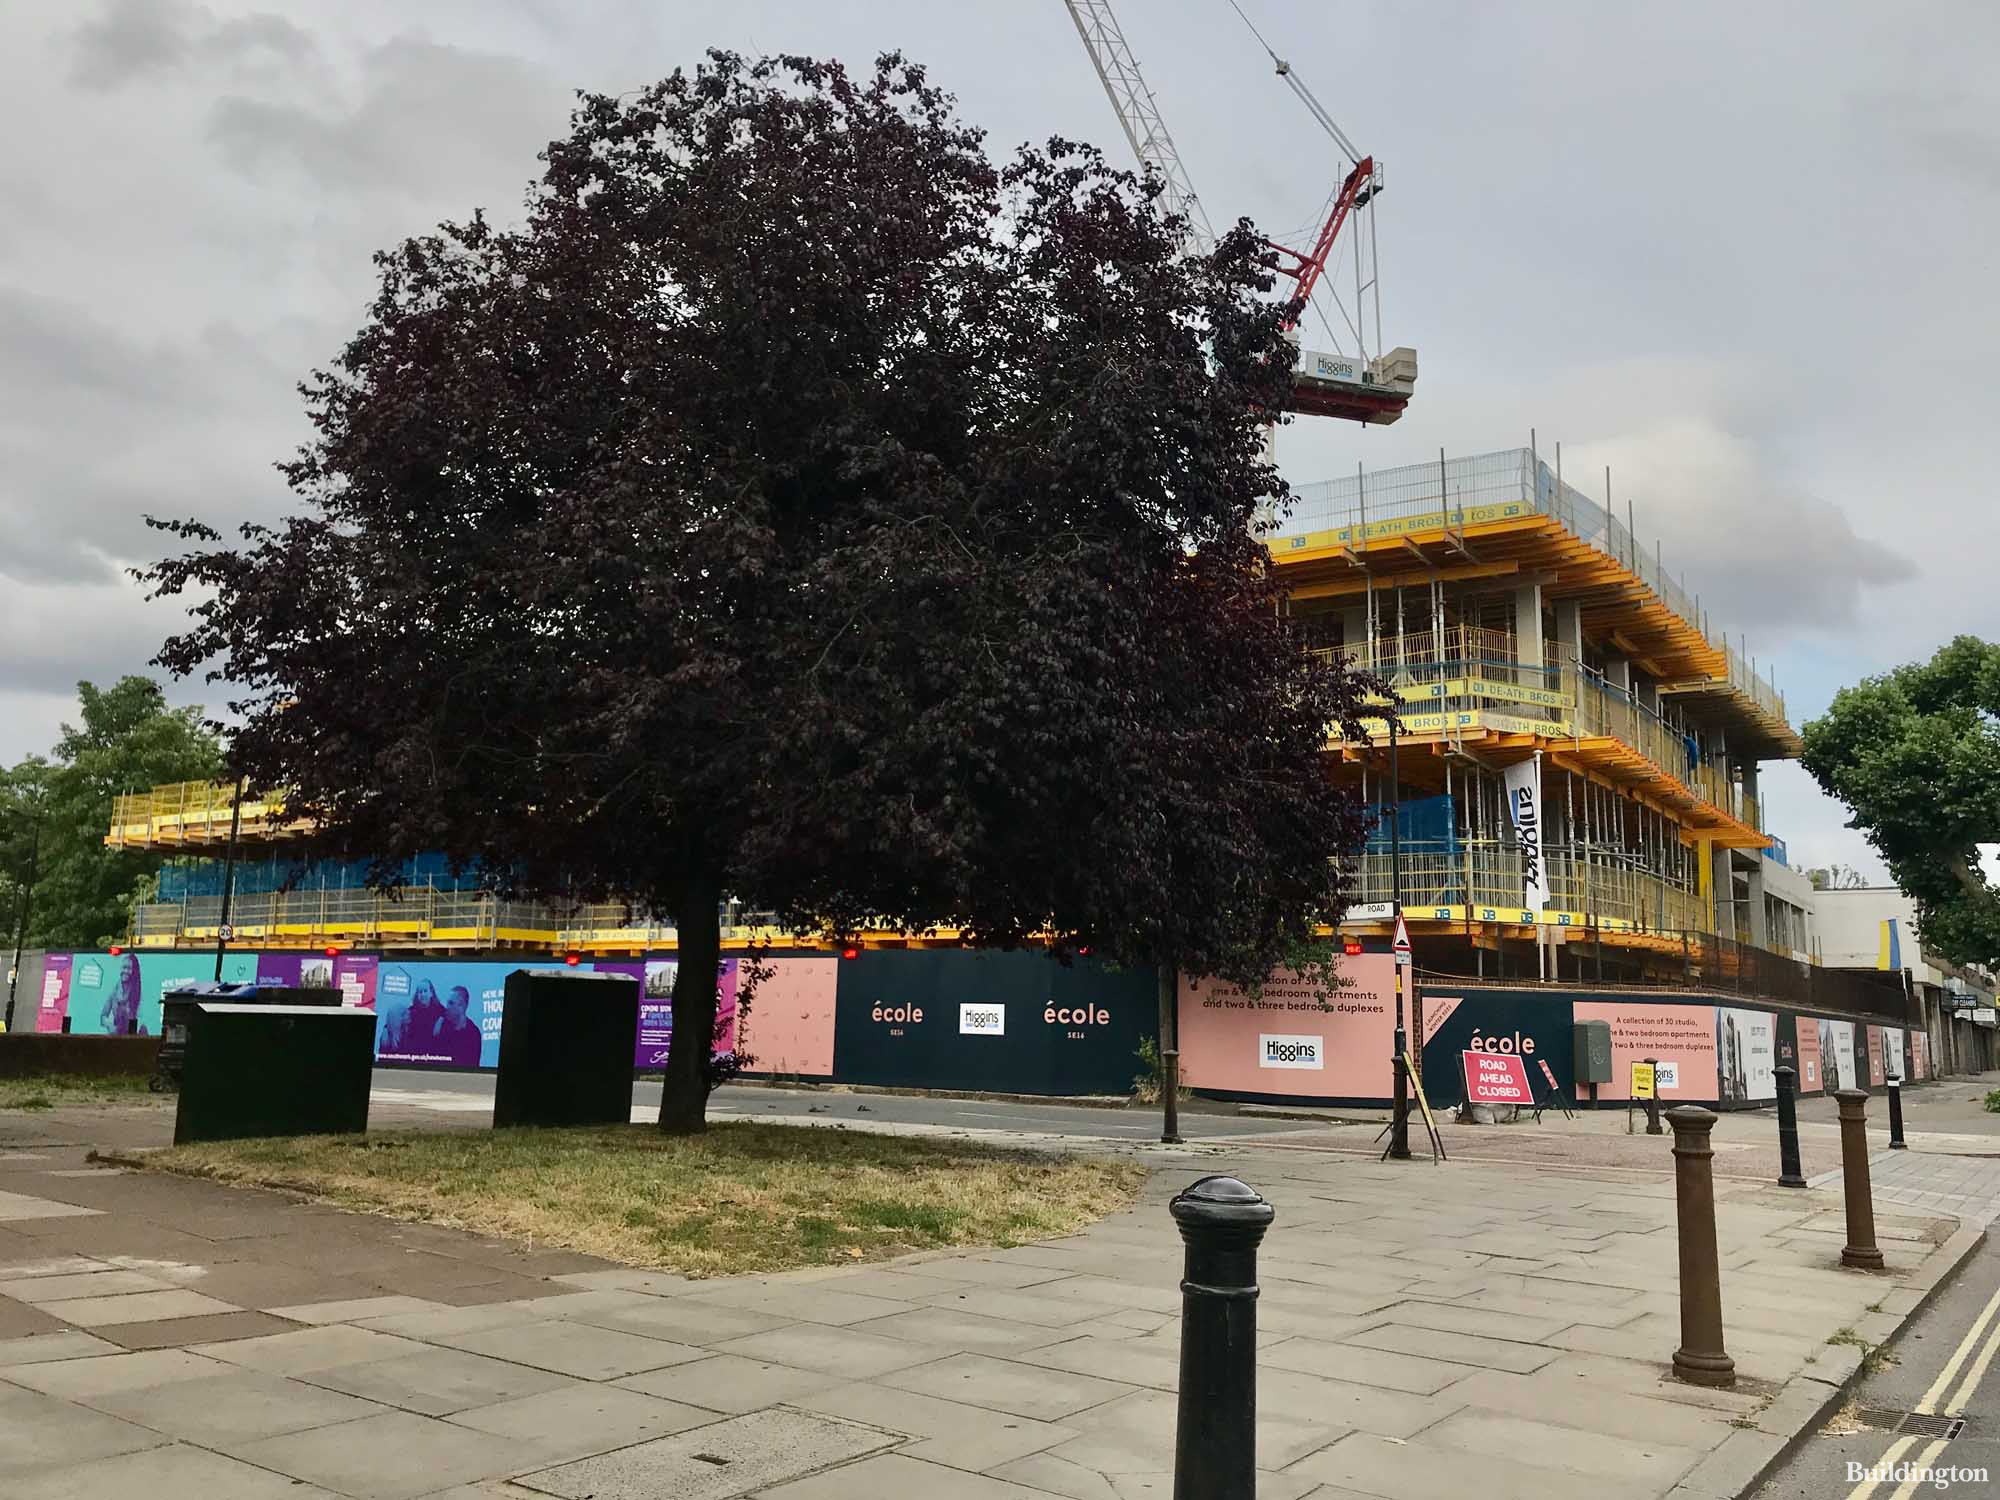 Ecole development under construction on the corner of Macks Road and Southwark Park Road in Bermondsey, London SE16.